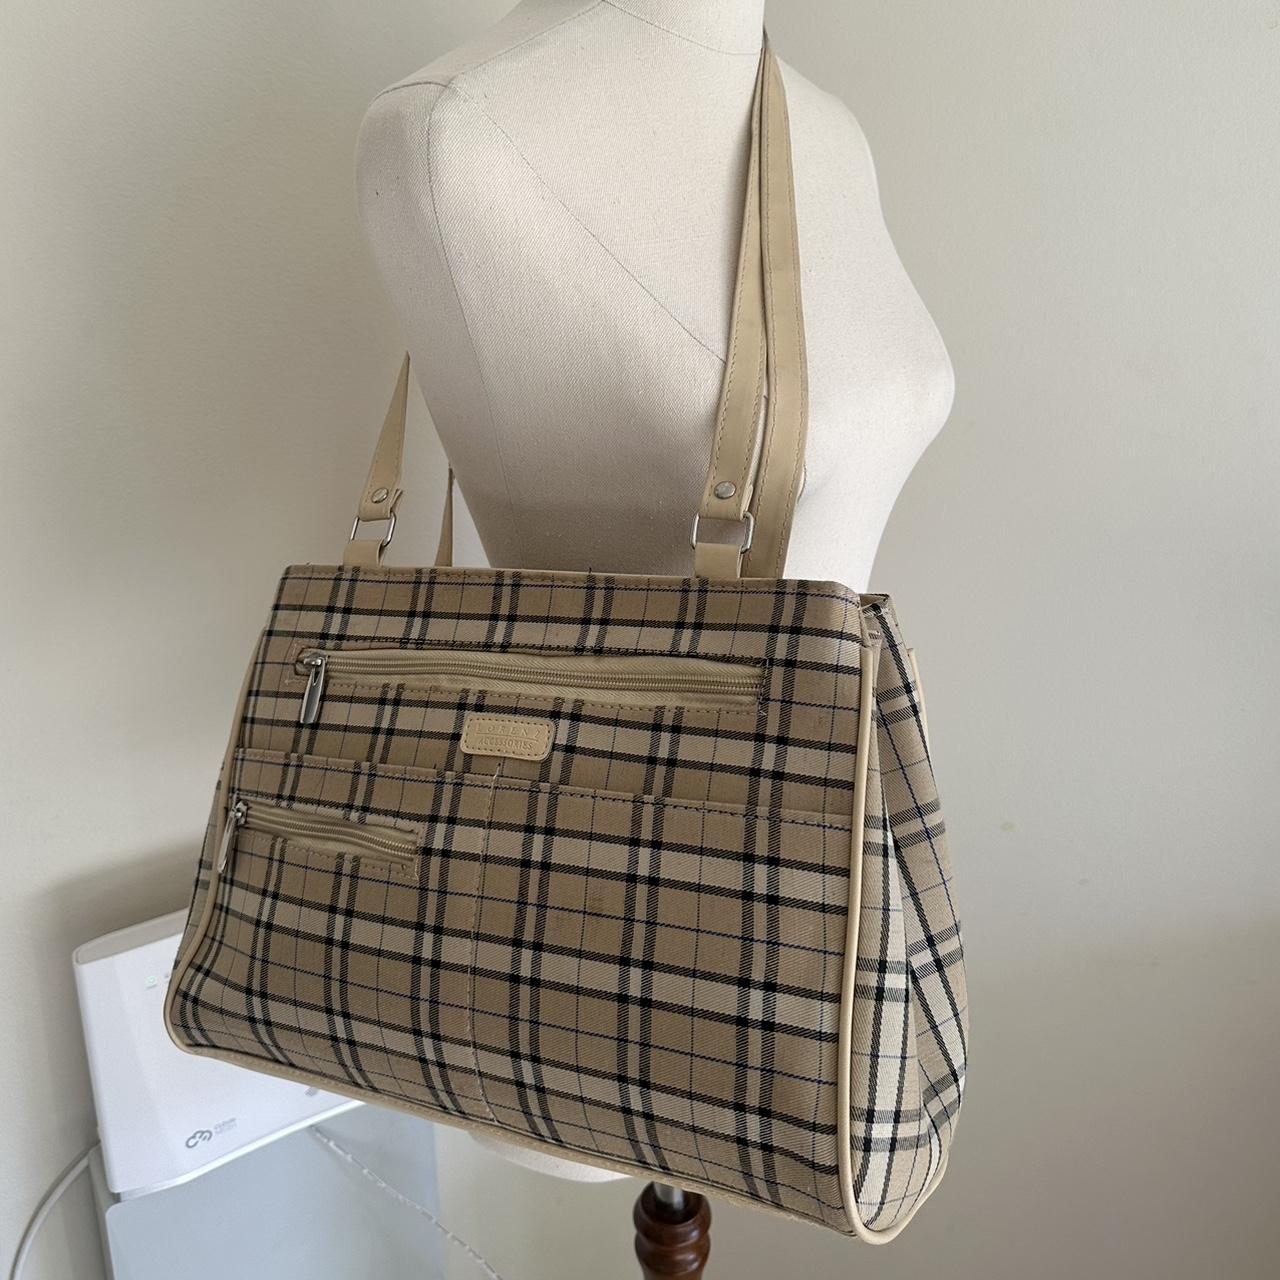 Stunning shoulder bag 💼 3 spacious zip up sections - Depop